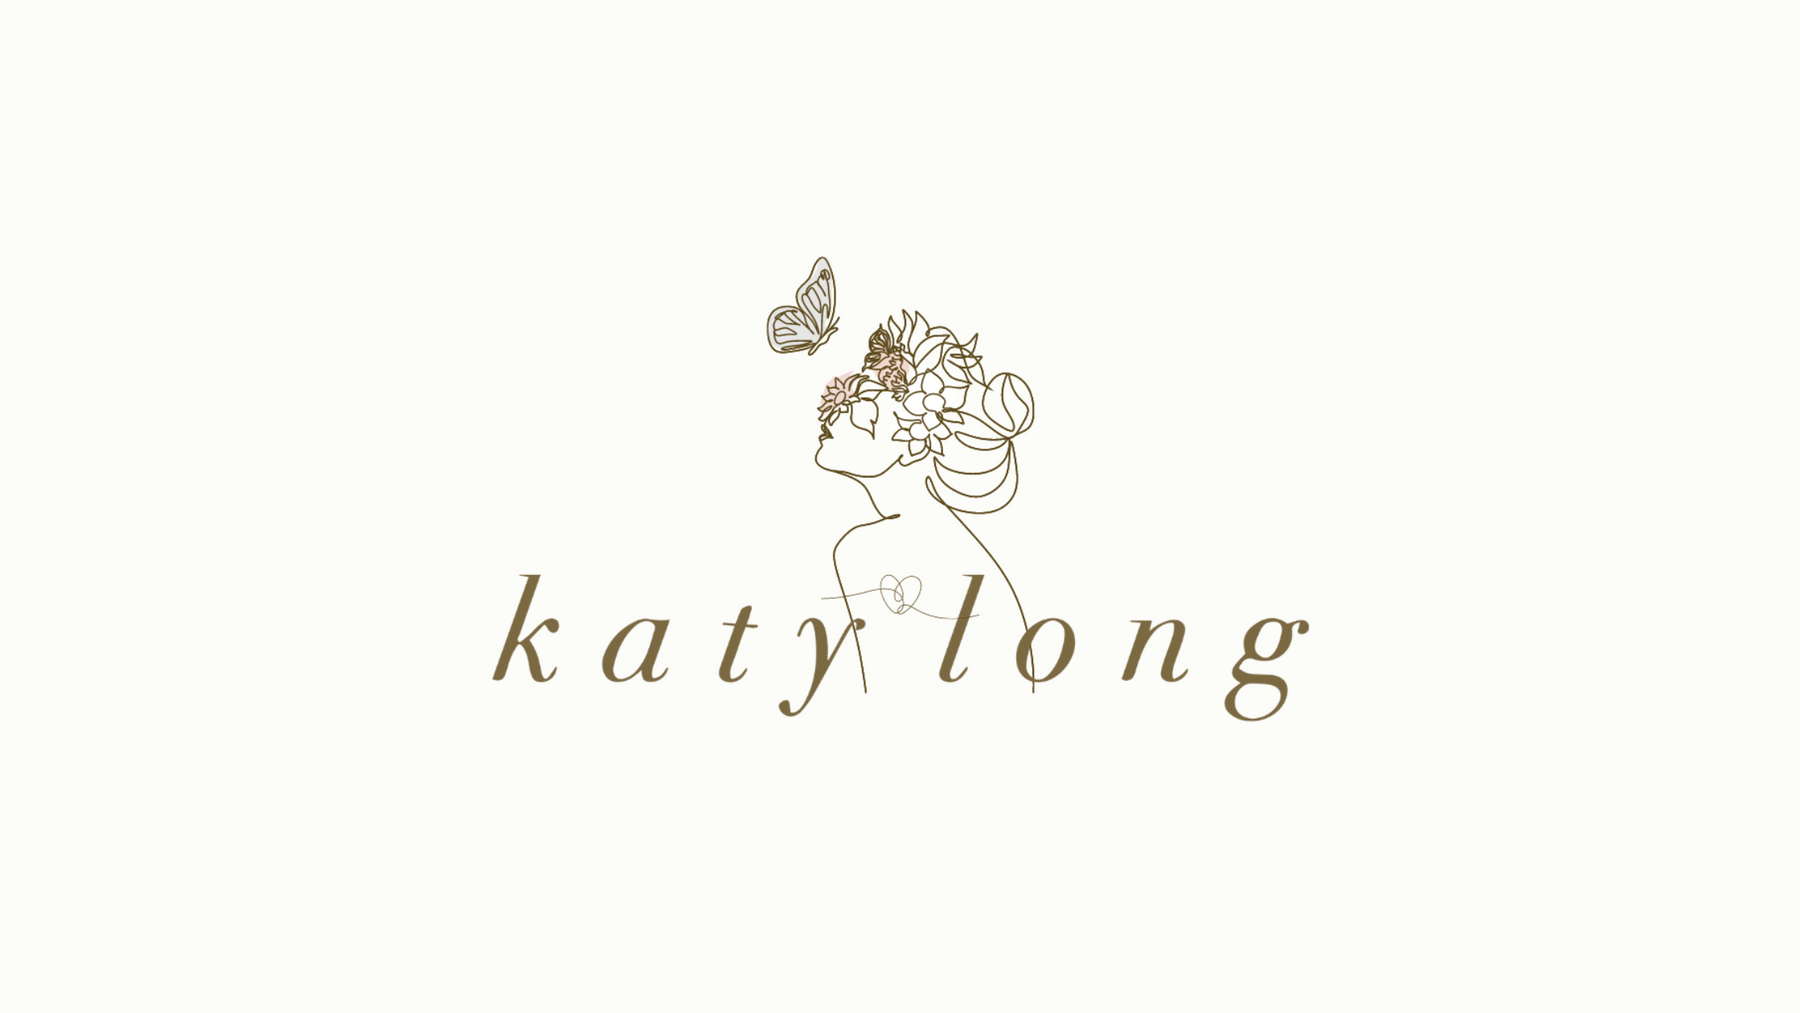 The Well 52: Katy Long